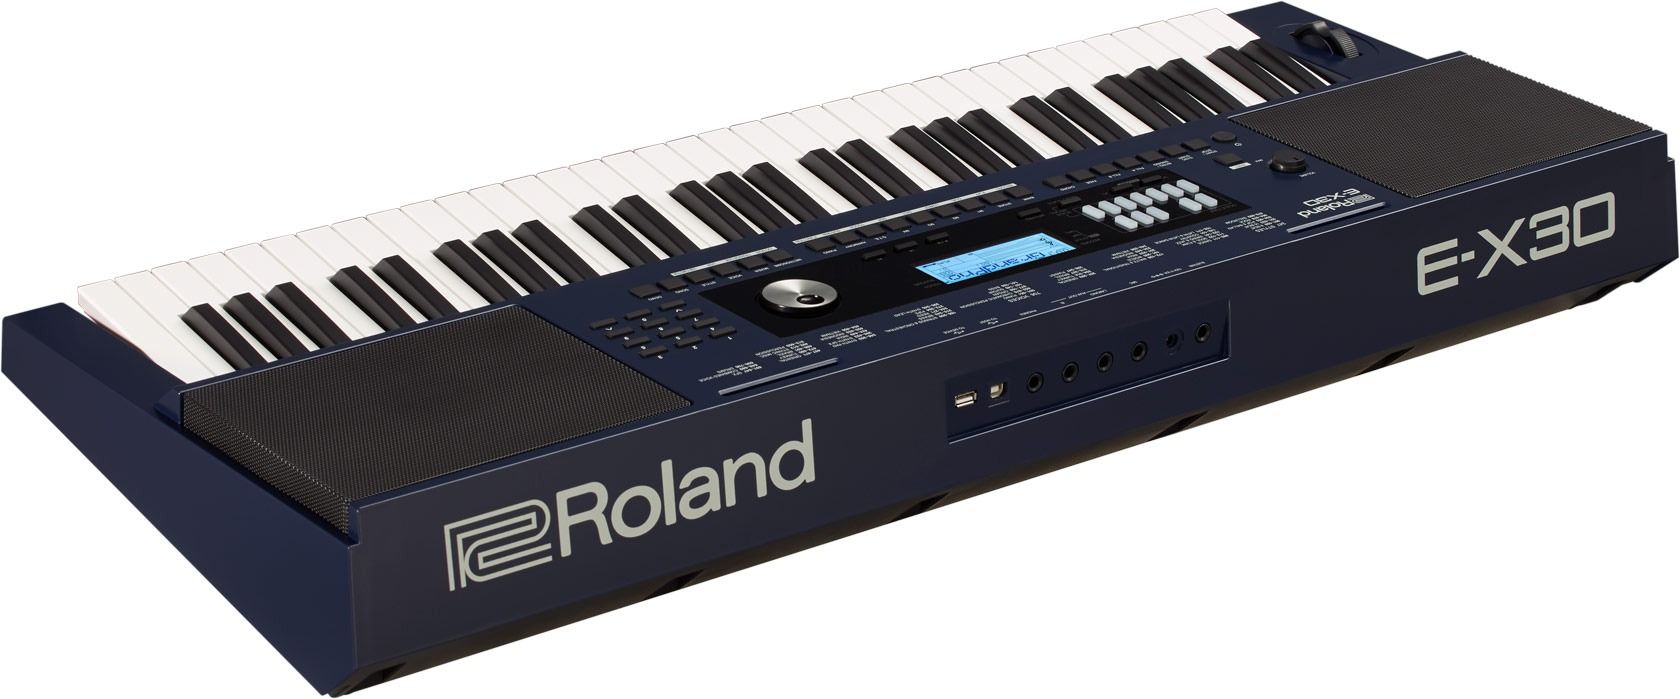  Đàn Organ Roland E-X30 